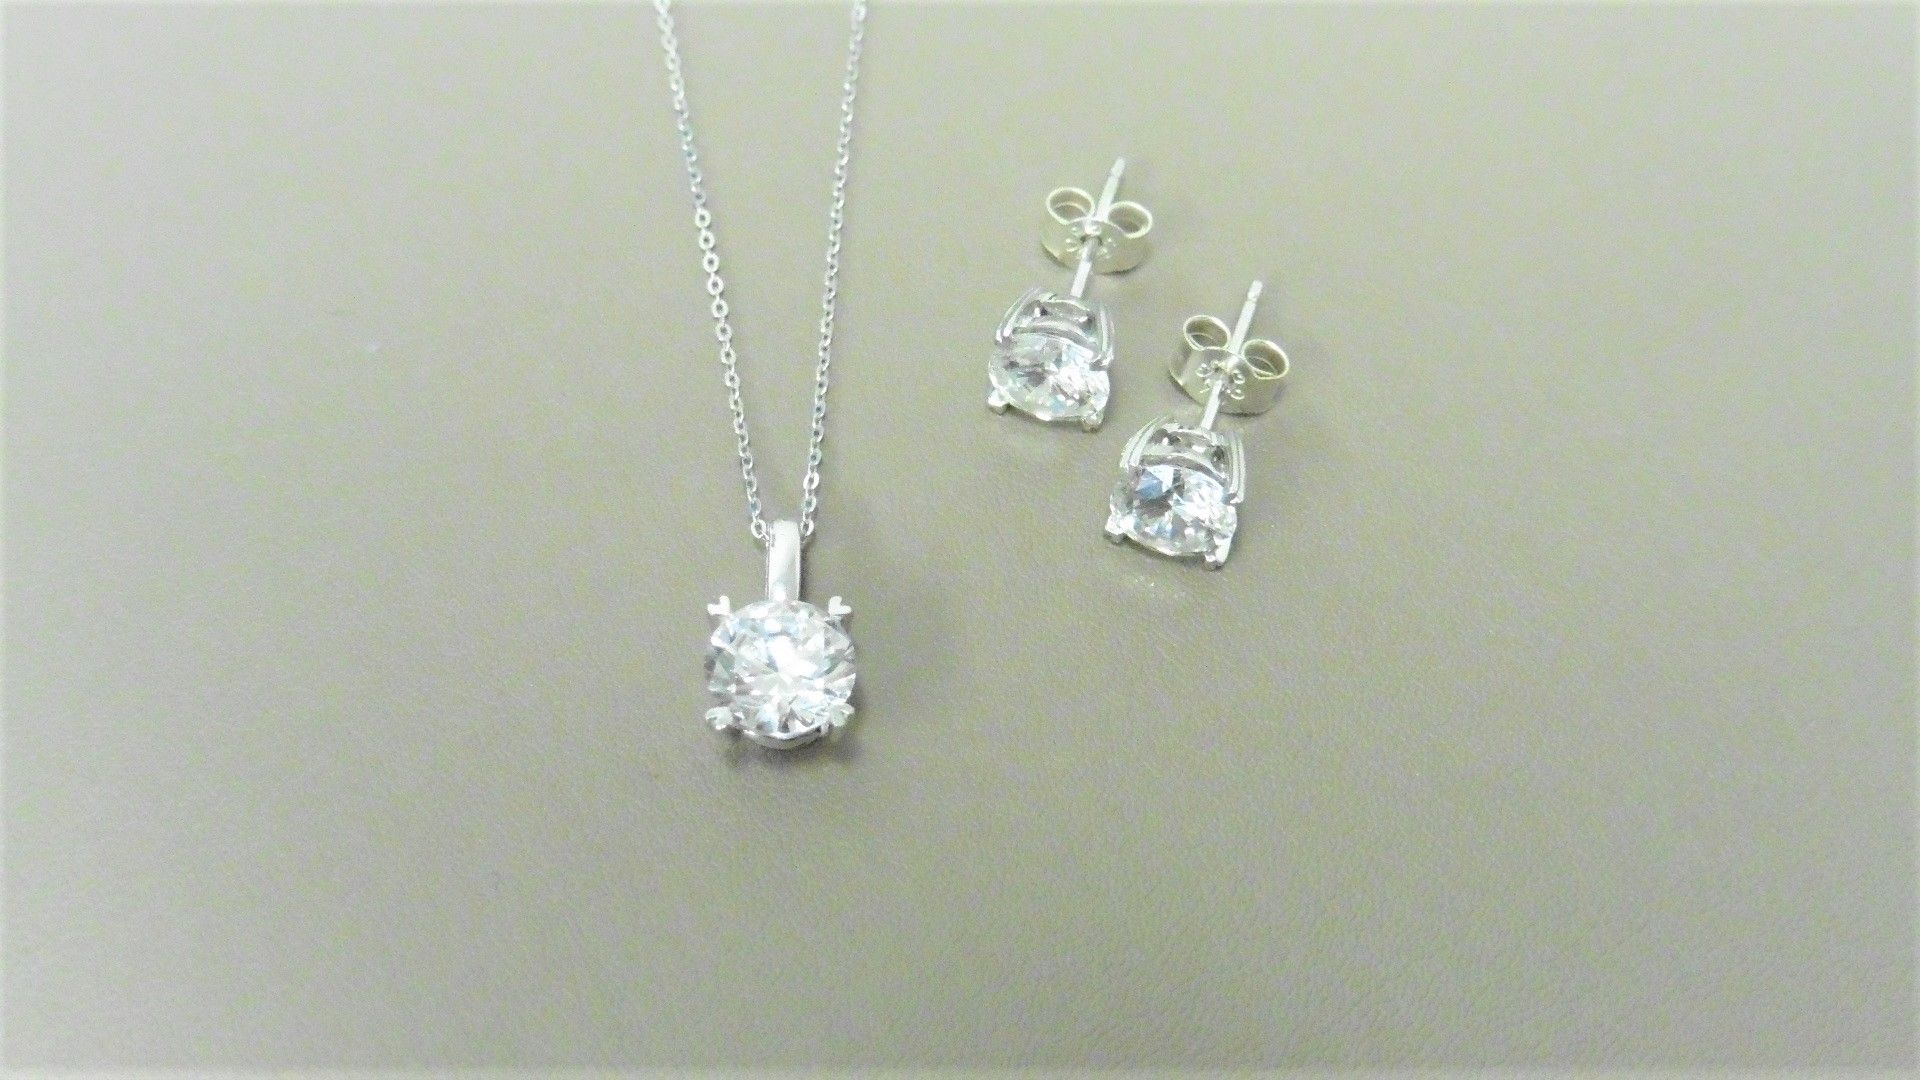 0.30Ct / 0.50Ct Diamond Pendant And Earring Set In Platinum.